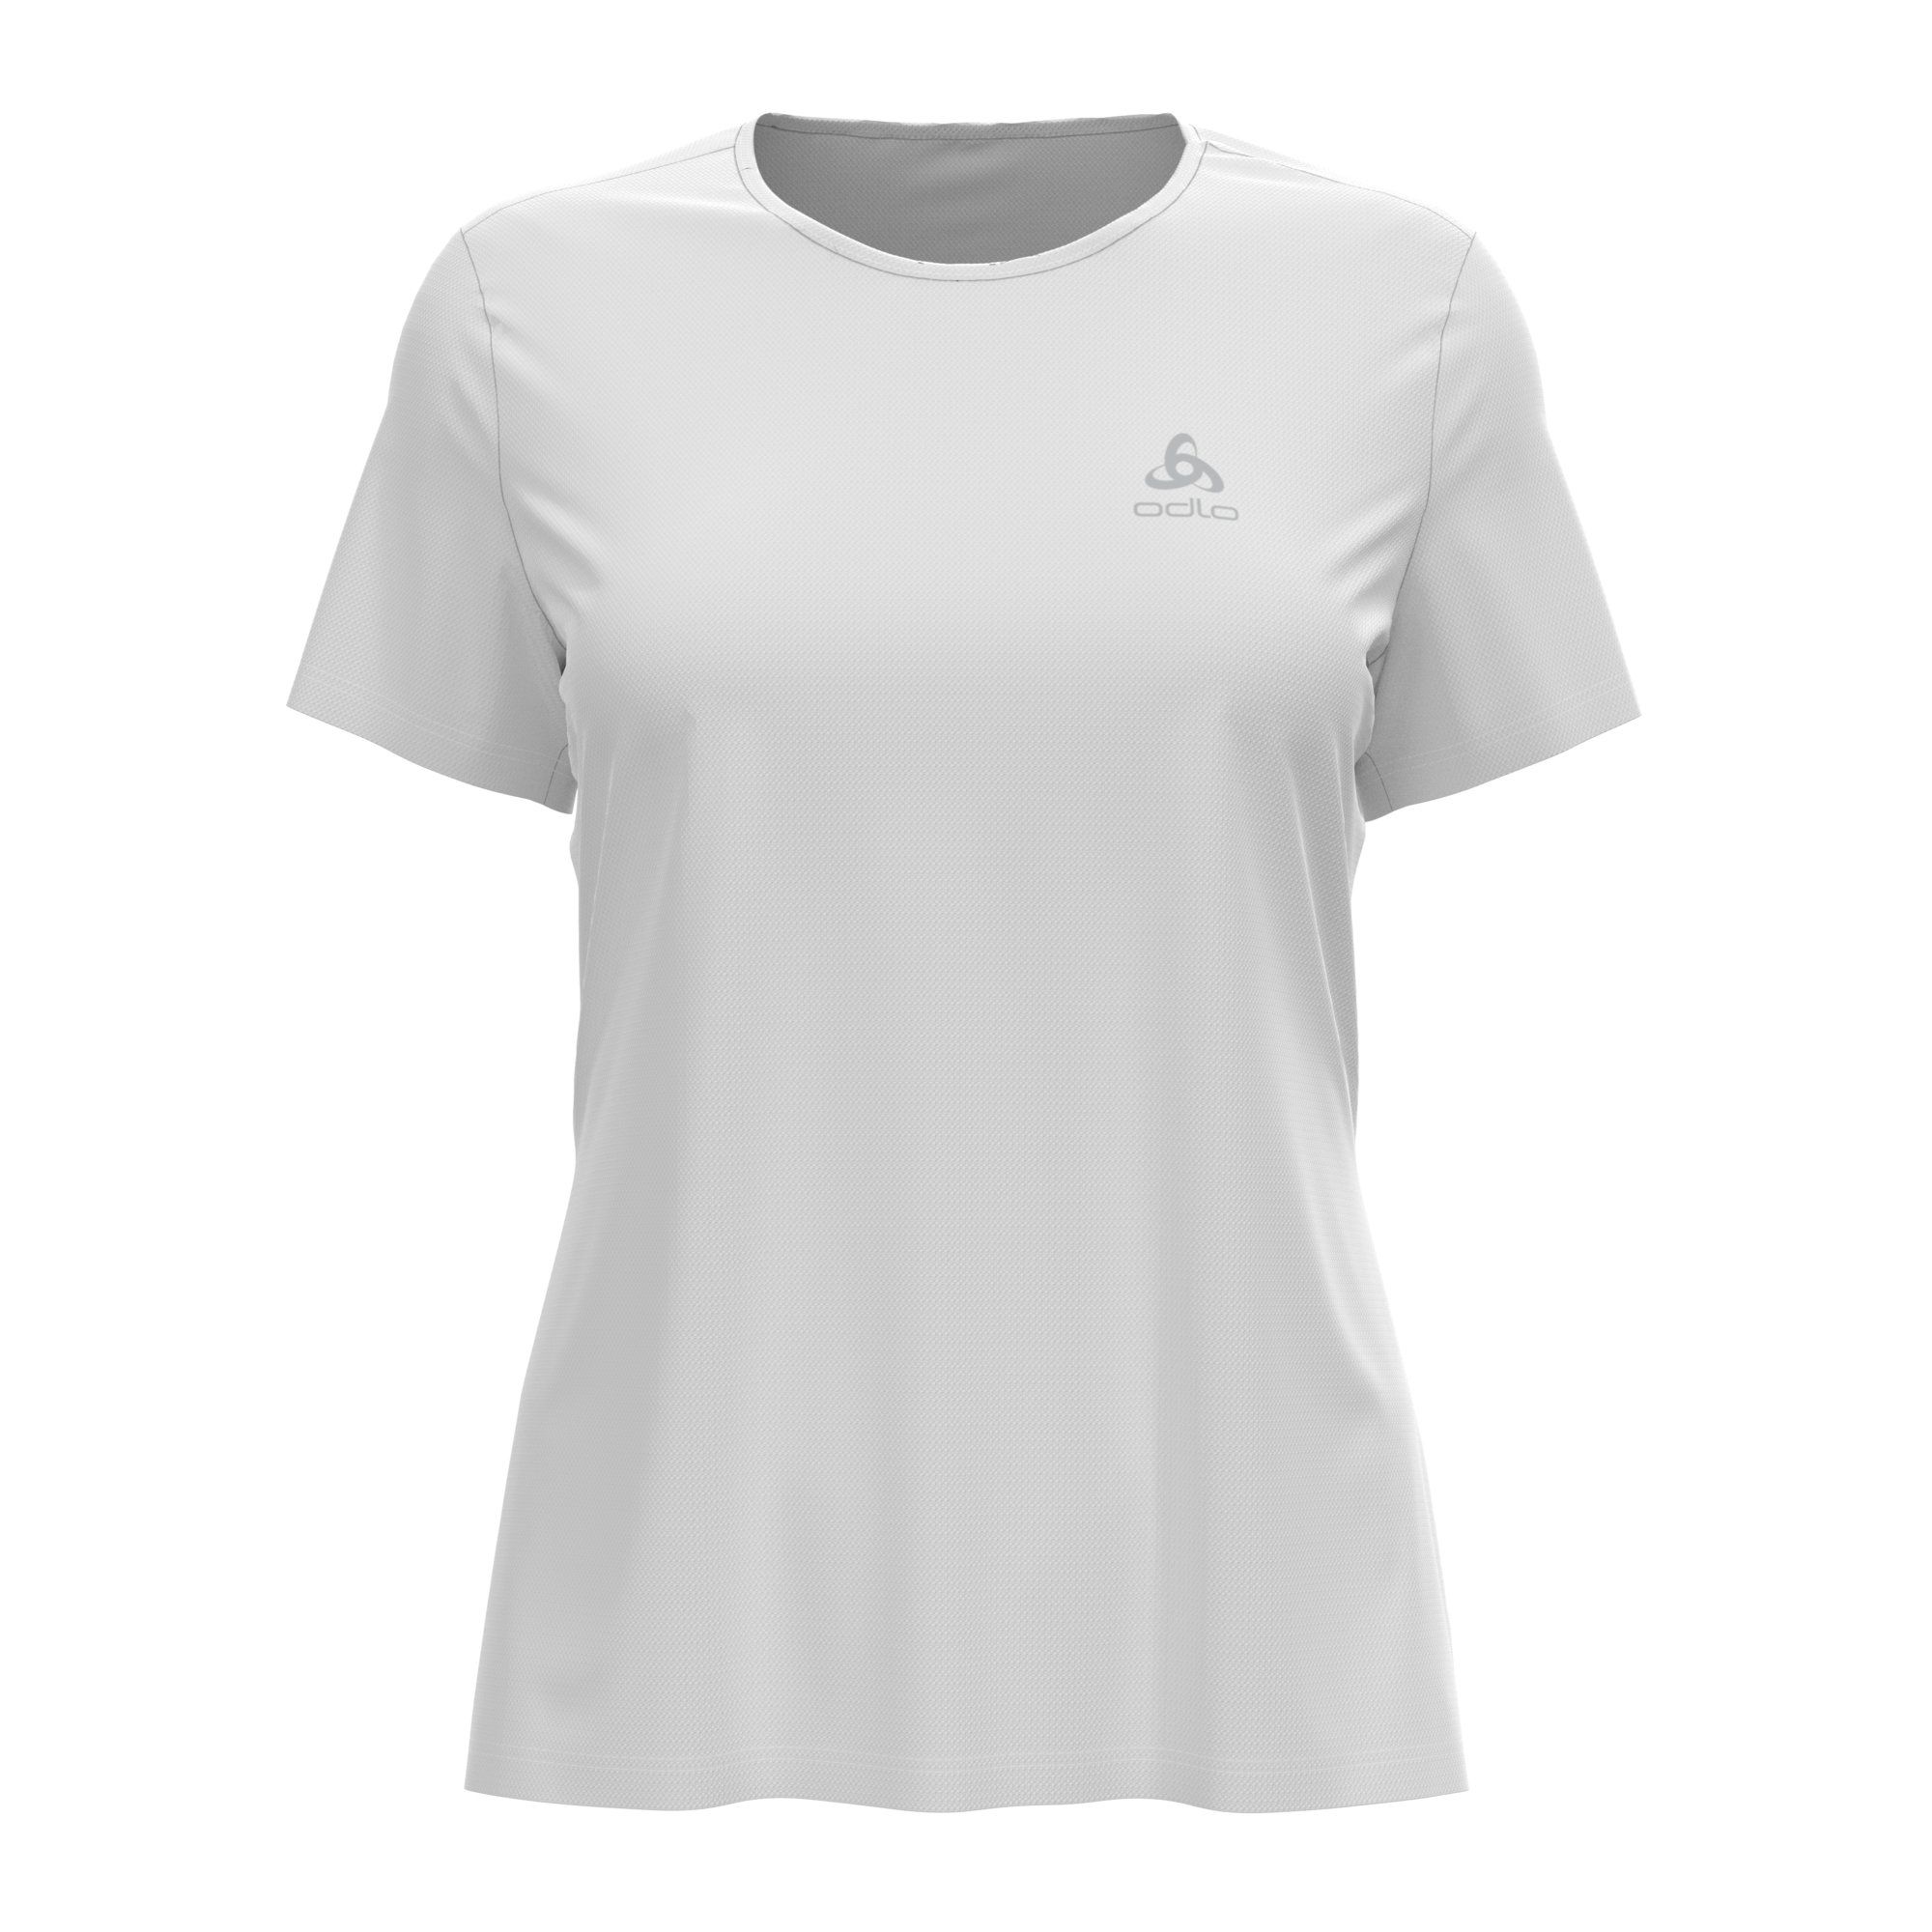 Tee Shirt de randonnée à manches courtes Cardada - White